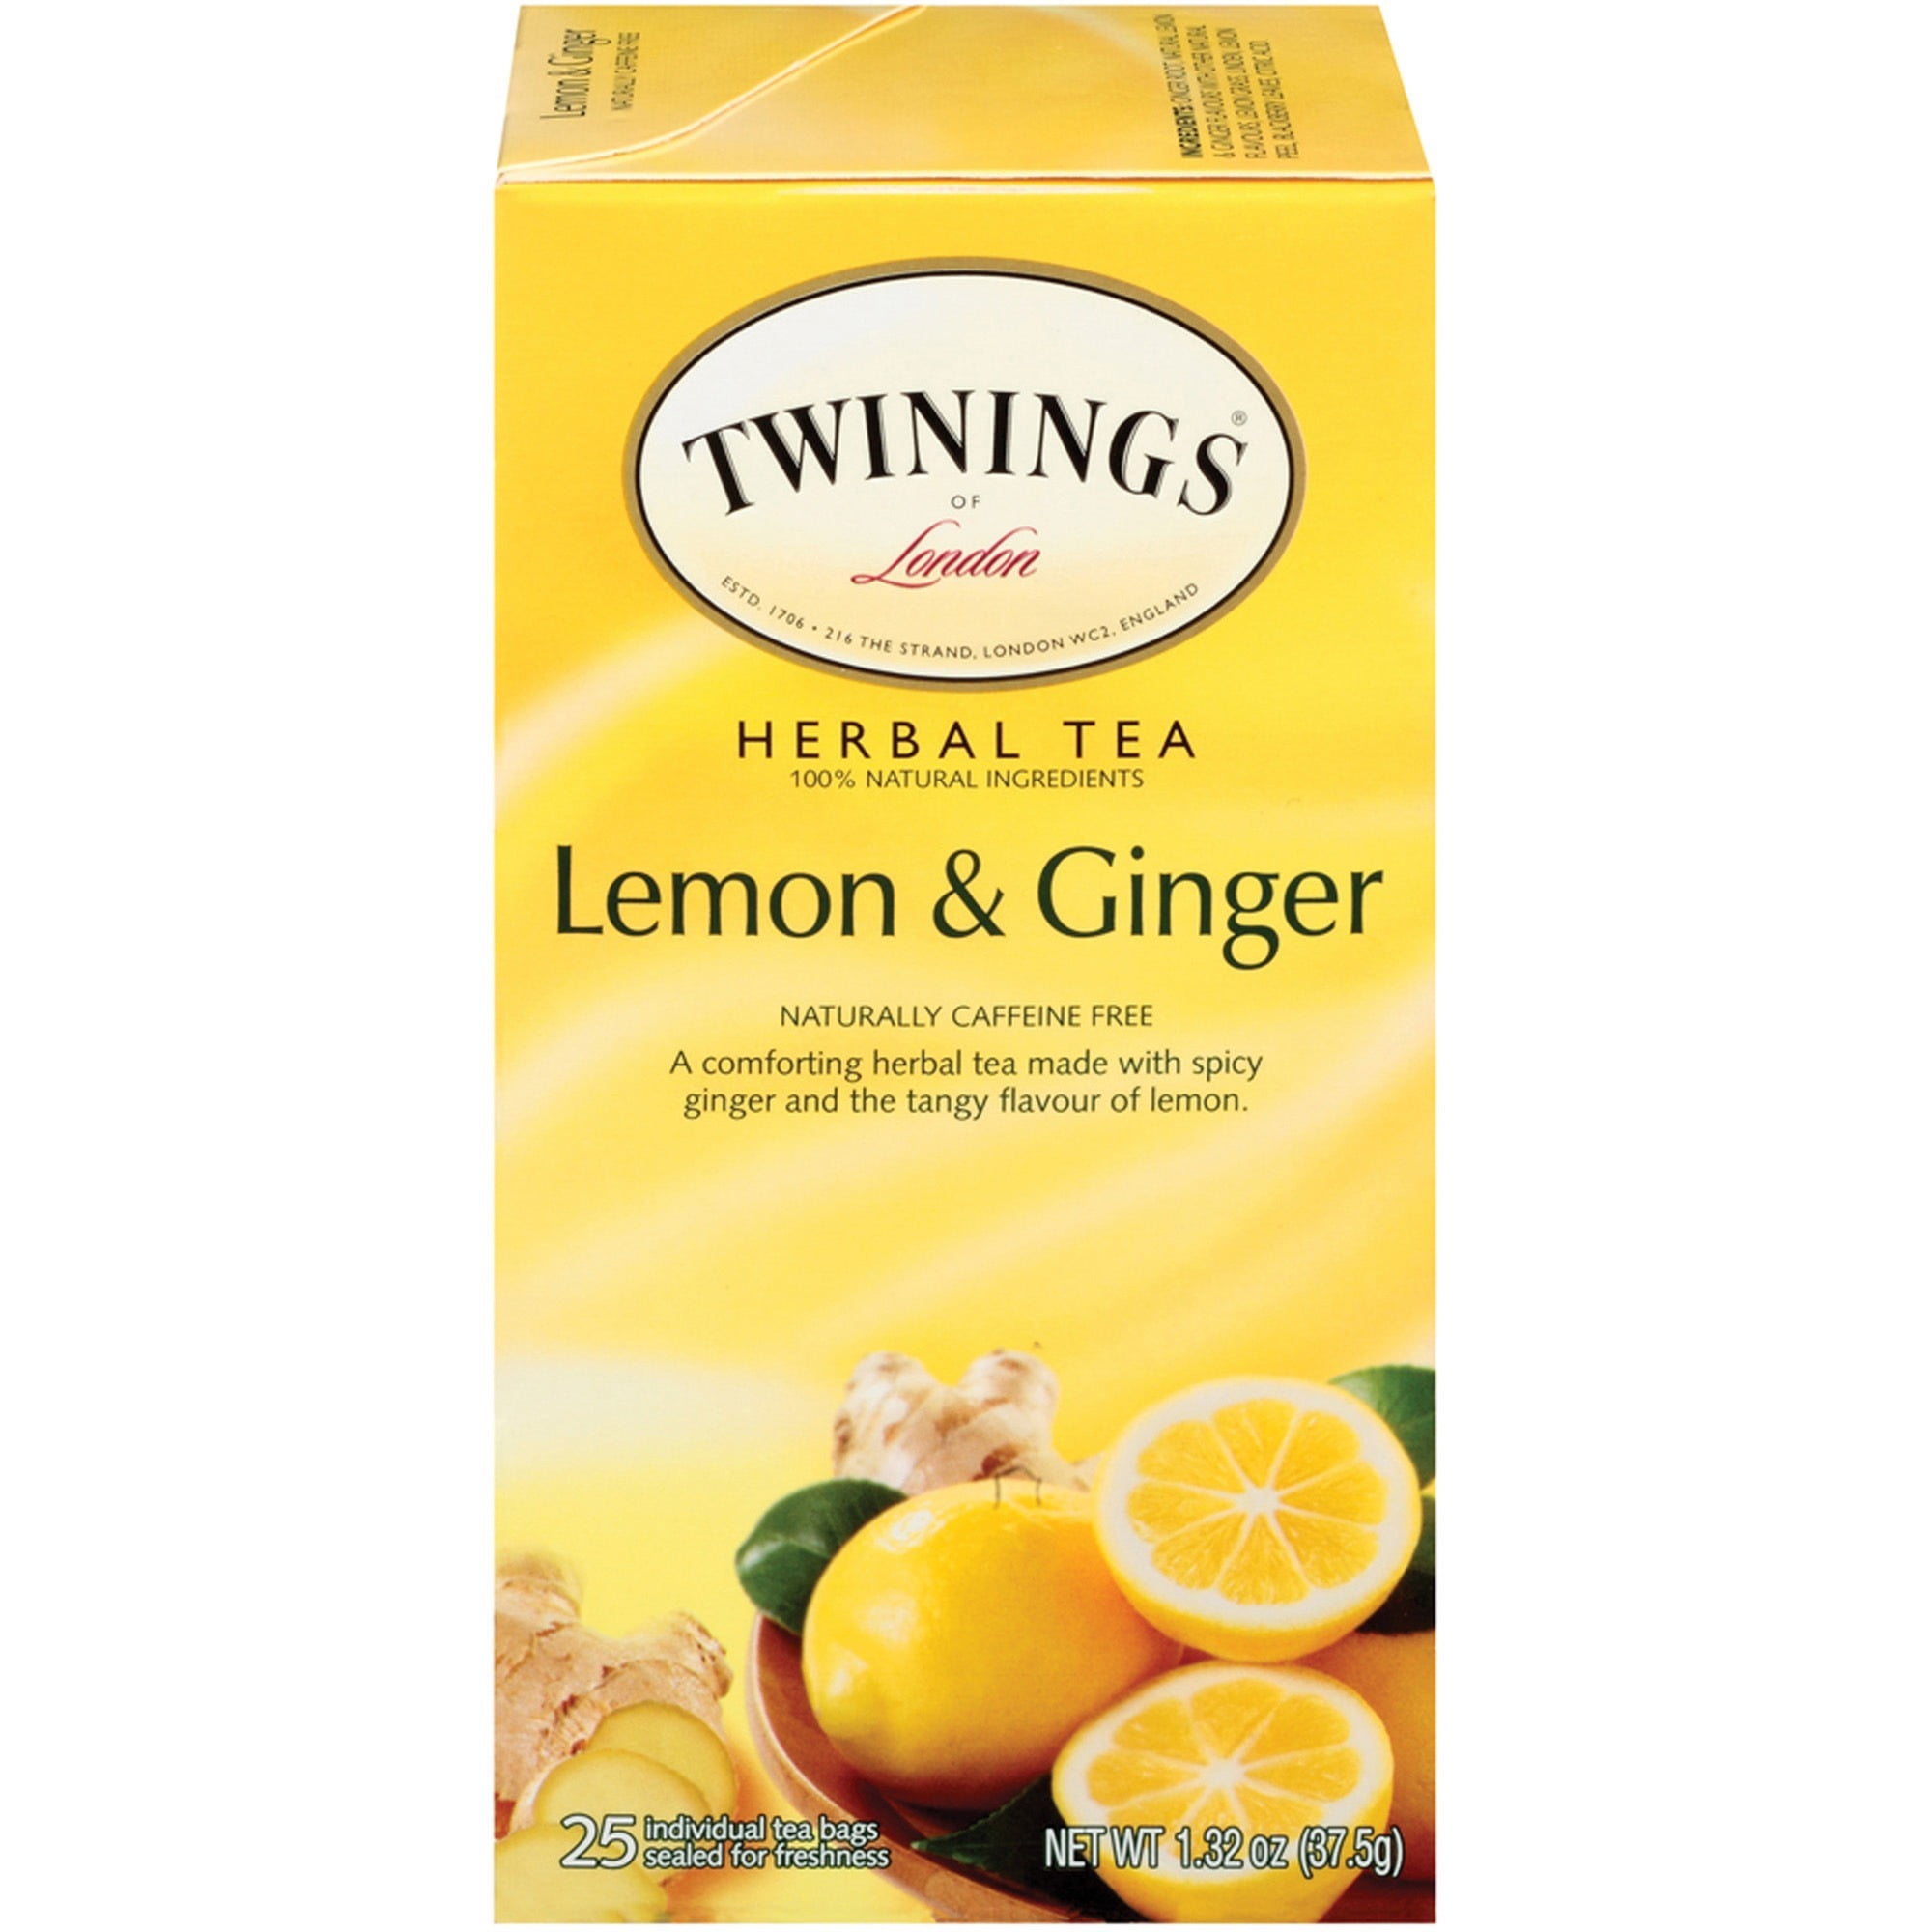 Twinings, TWG09180, Lemon & Ginger Herbal Tea, 25 / Box - Walmart.com